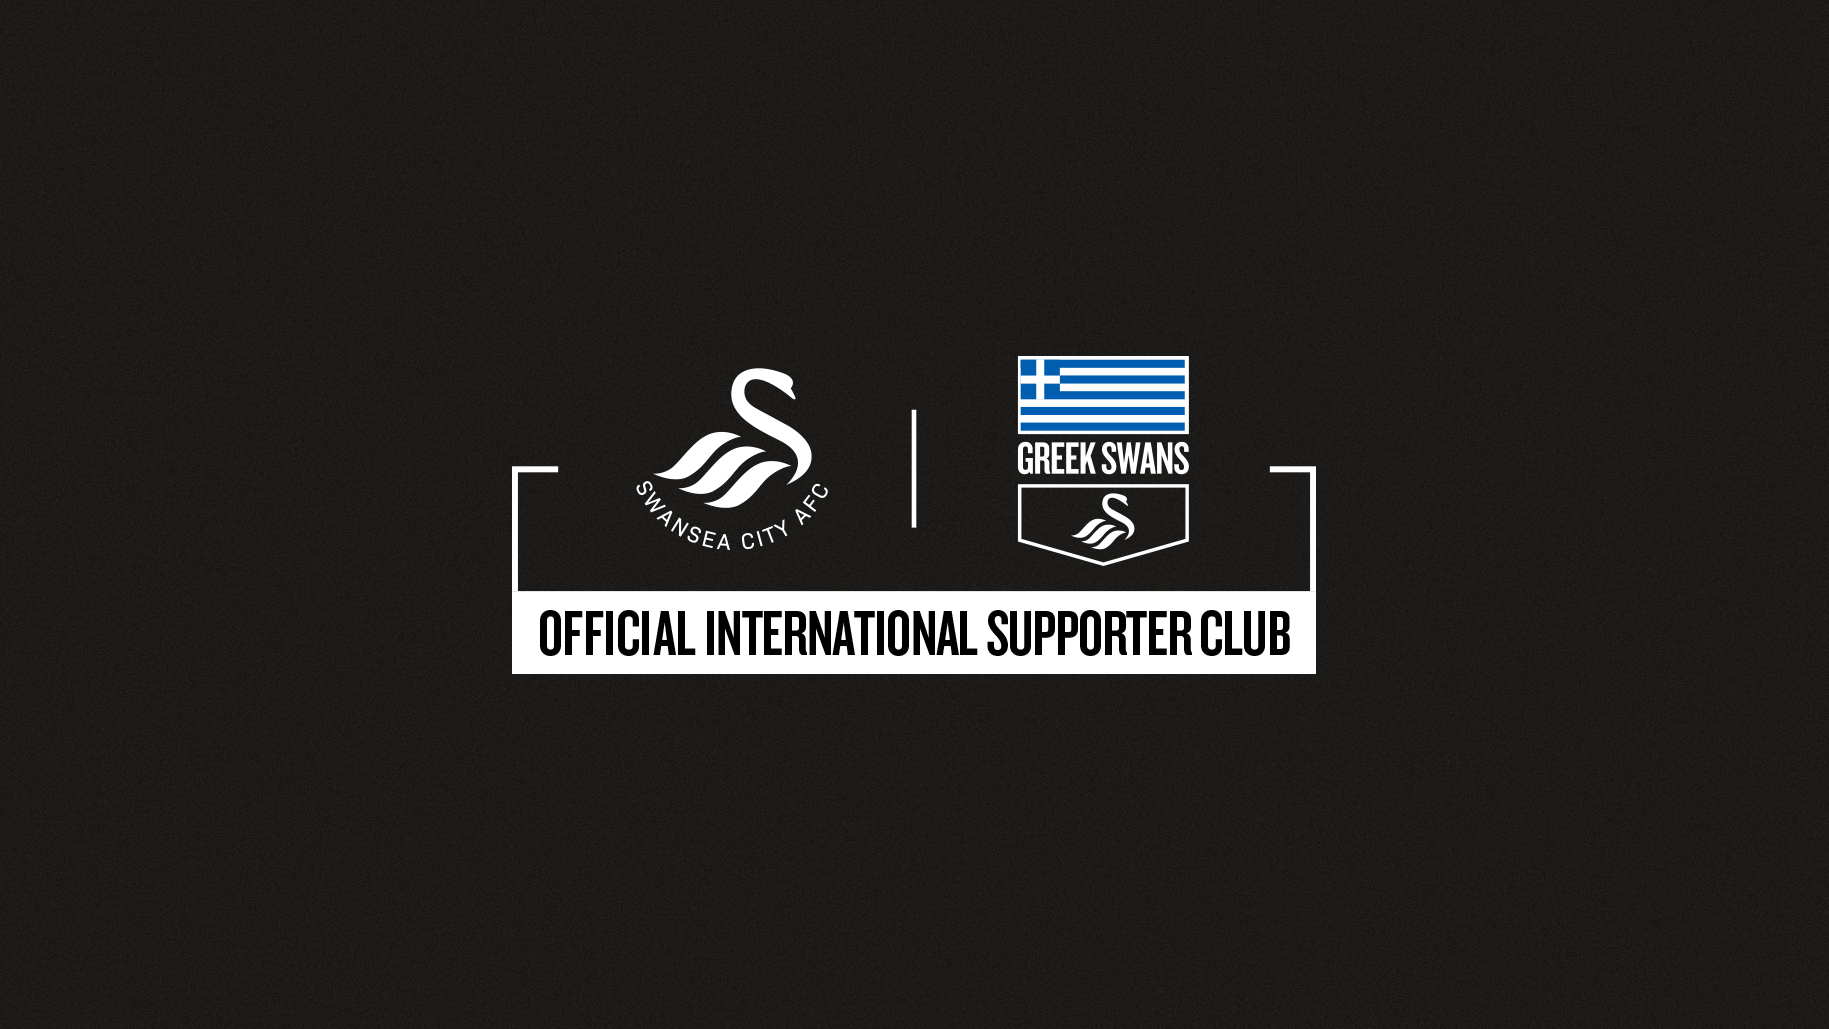 Greek Swans Supporters Club